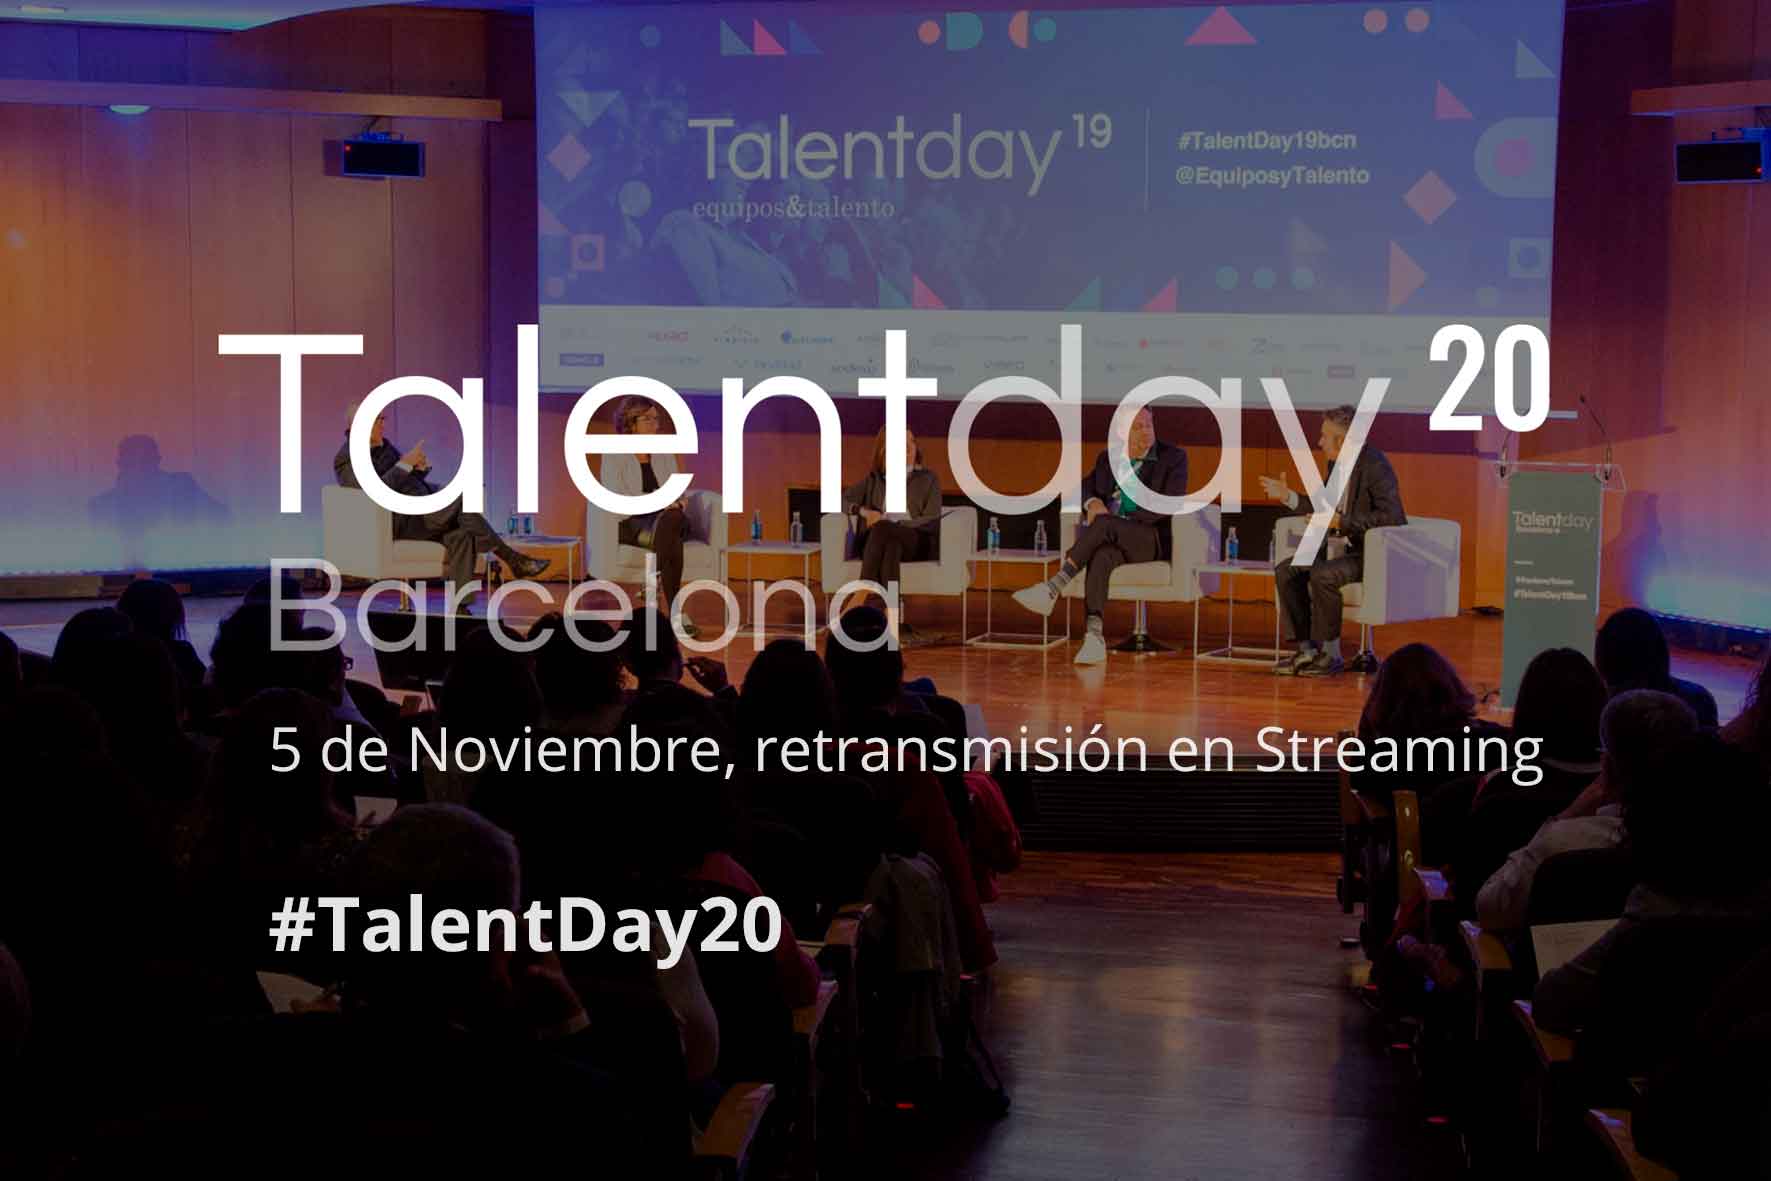 Participaremos en el Talent Day Barcelona 2020: Reconnecting People & Reinventing Organizations